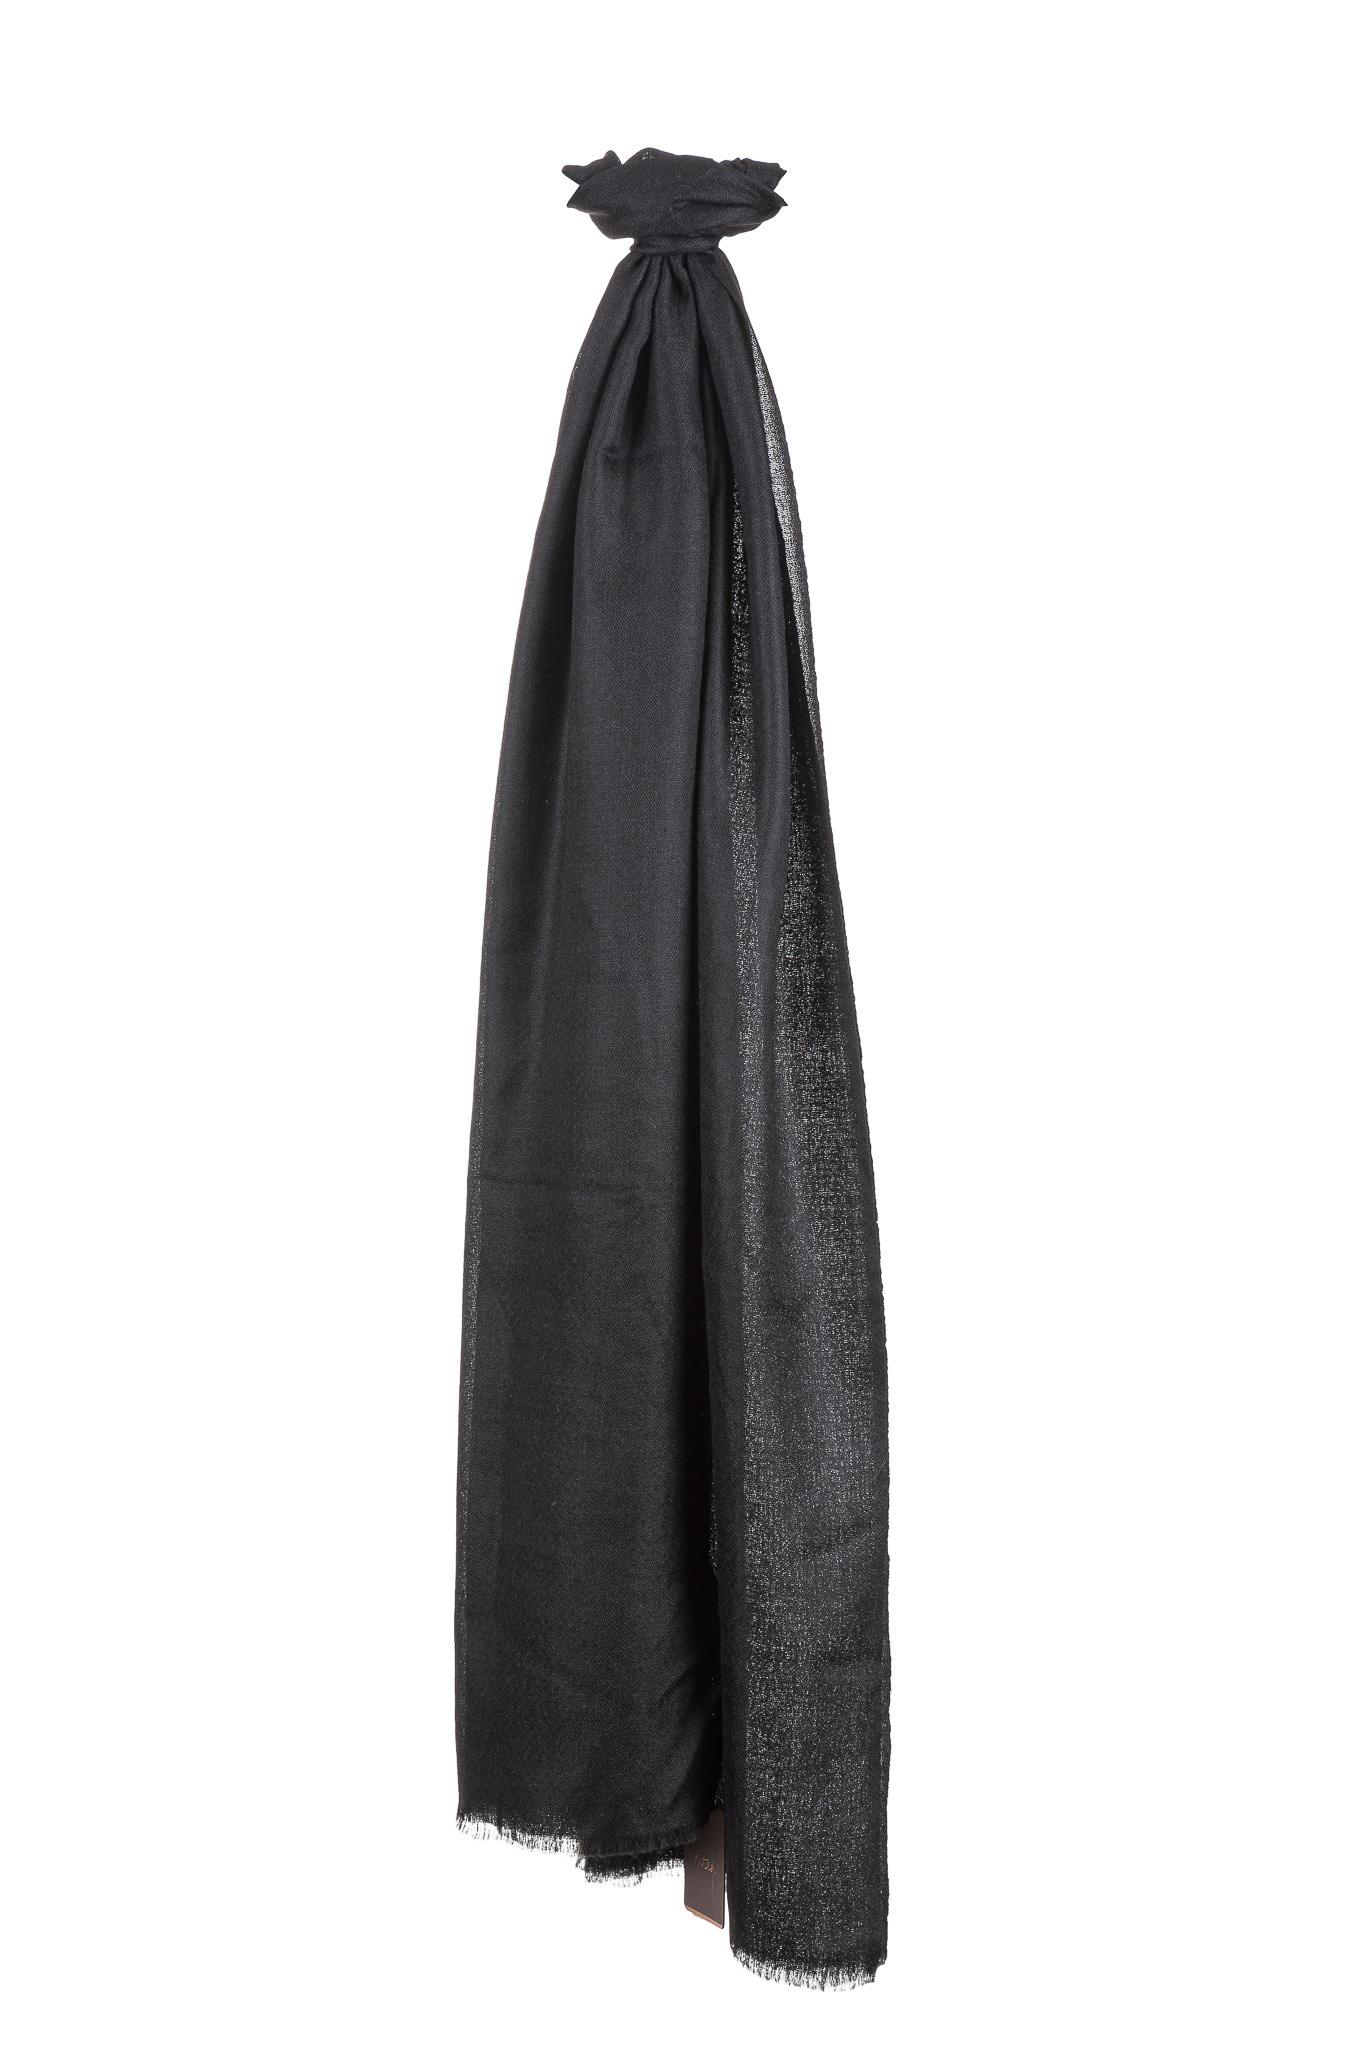 ALTEA MILANO Casual Chic Pure Cashmere Black Stole Scarf Made in Italy ...